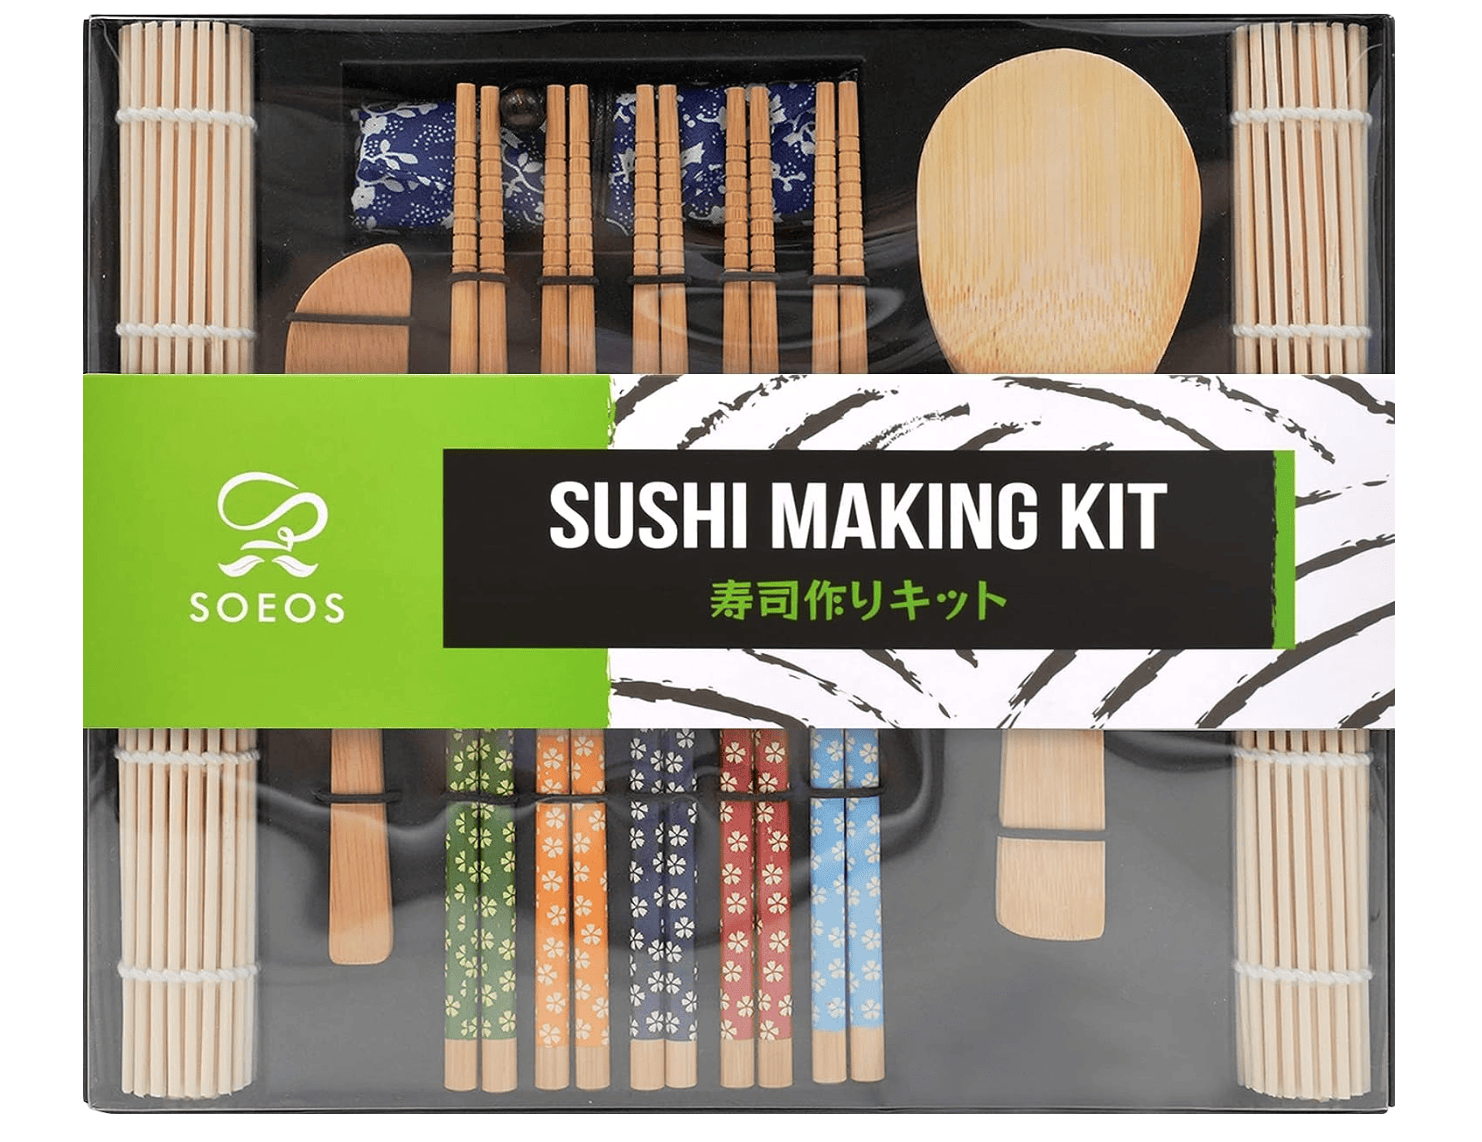 Helen's Asian Kitchen Sushi Mat - 6 per case